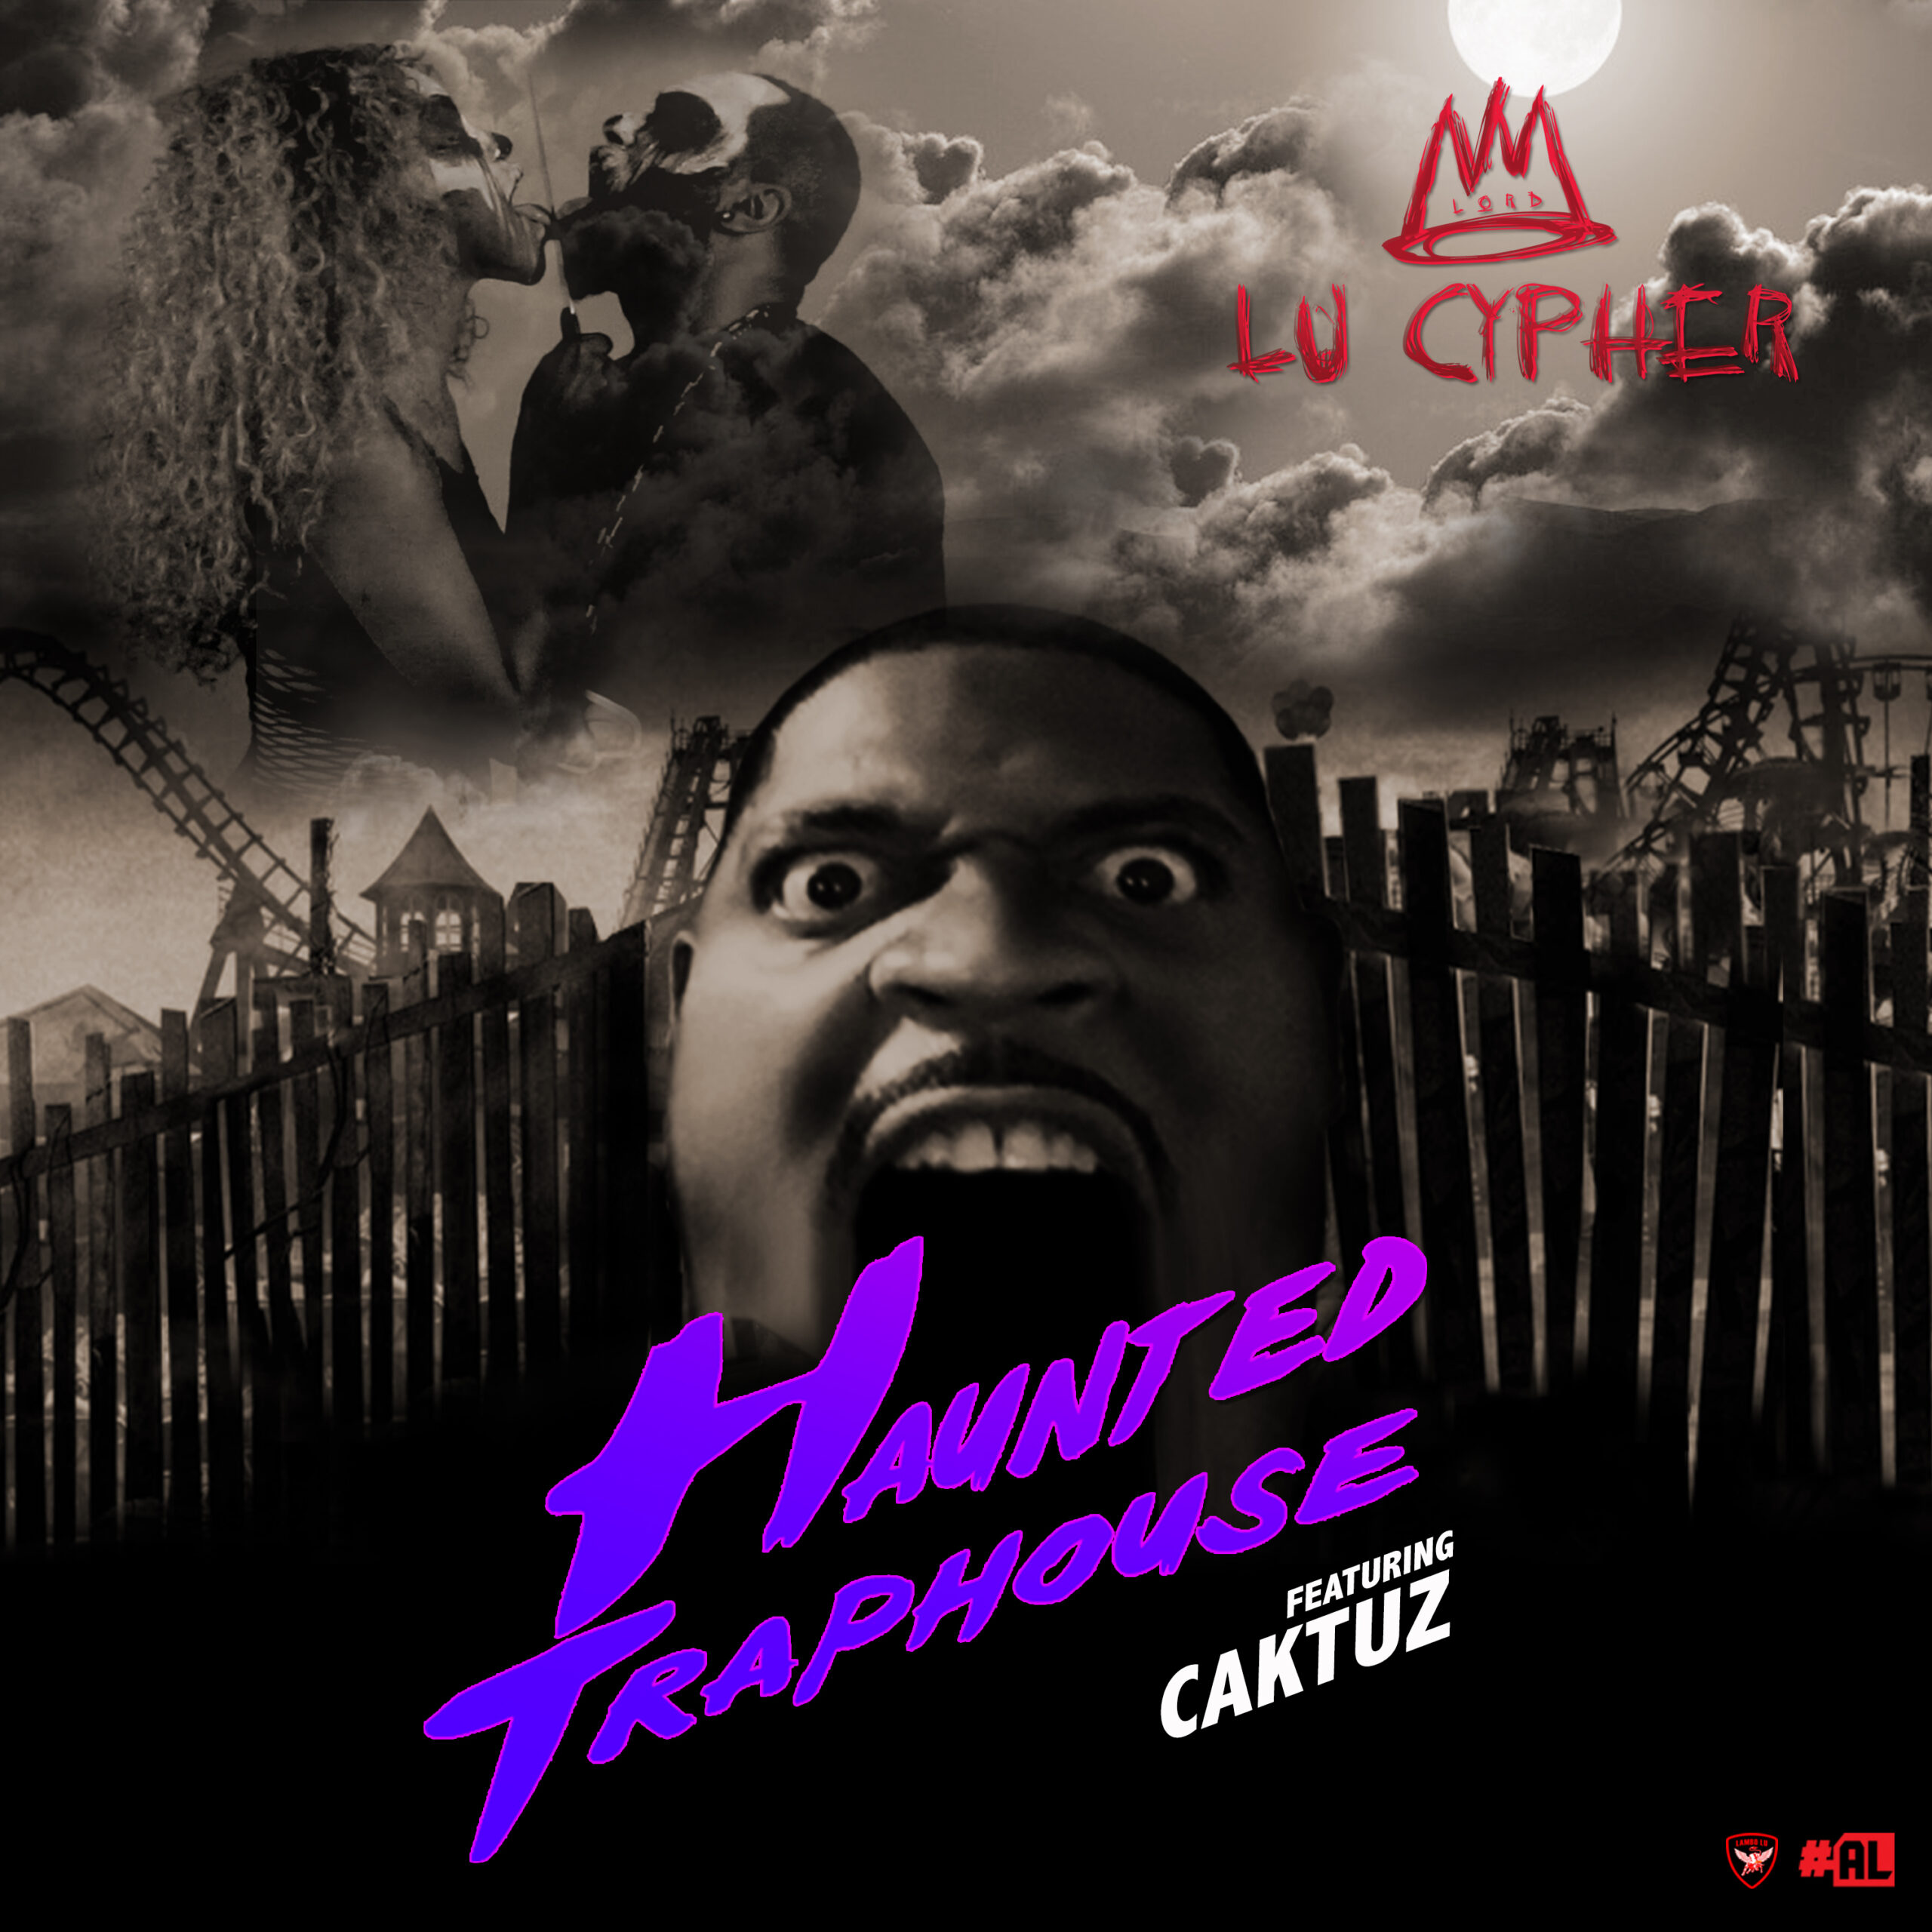 Caktuz x Lord Lu Cypher - Haunted Traphouse (Single)